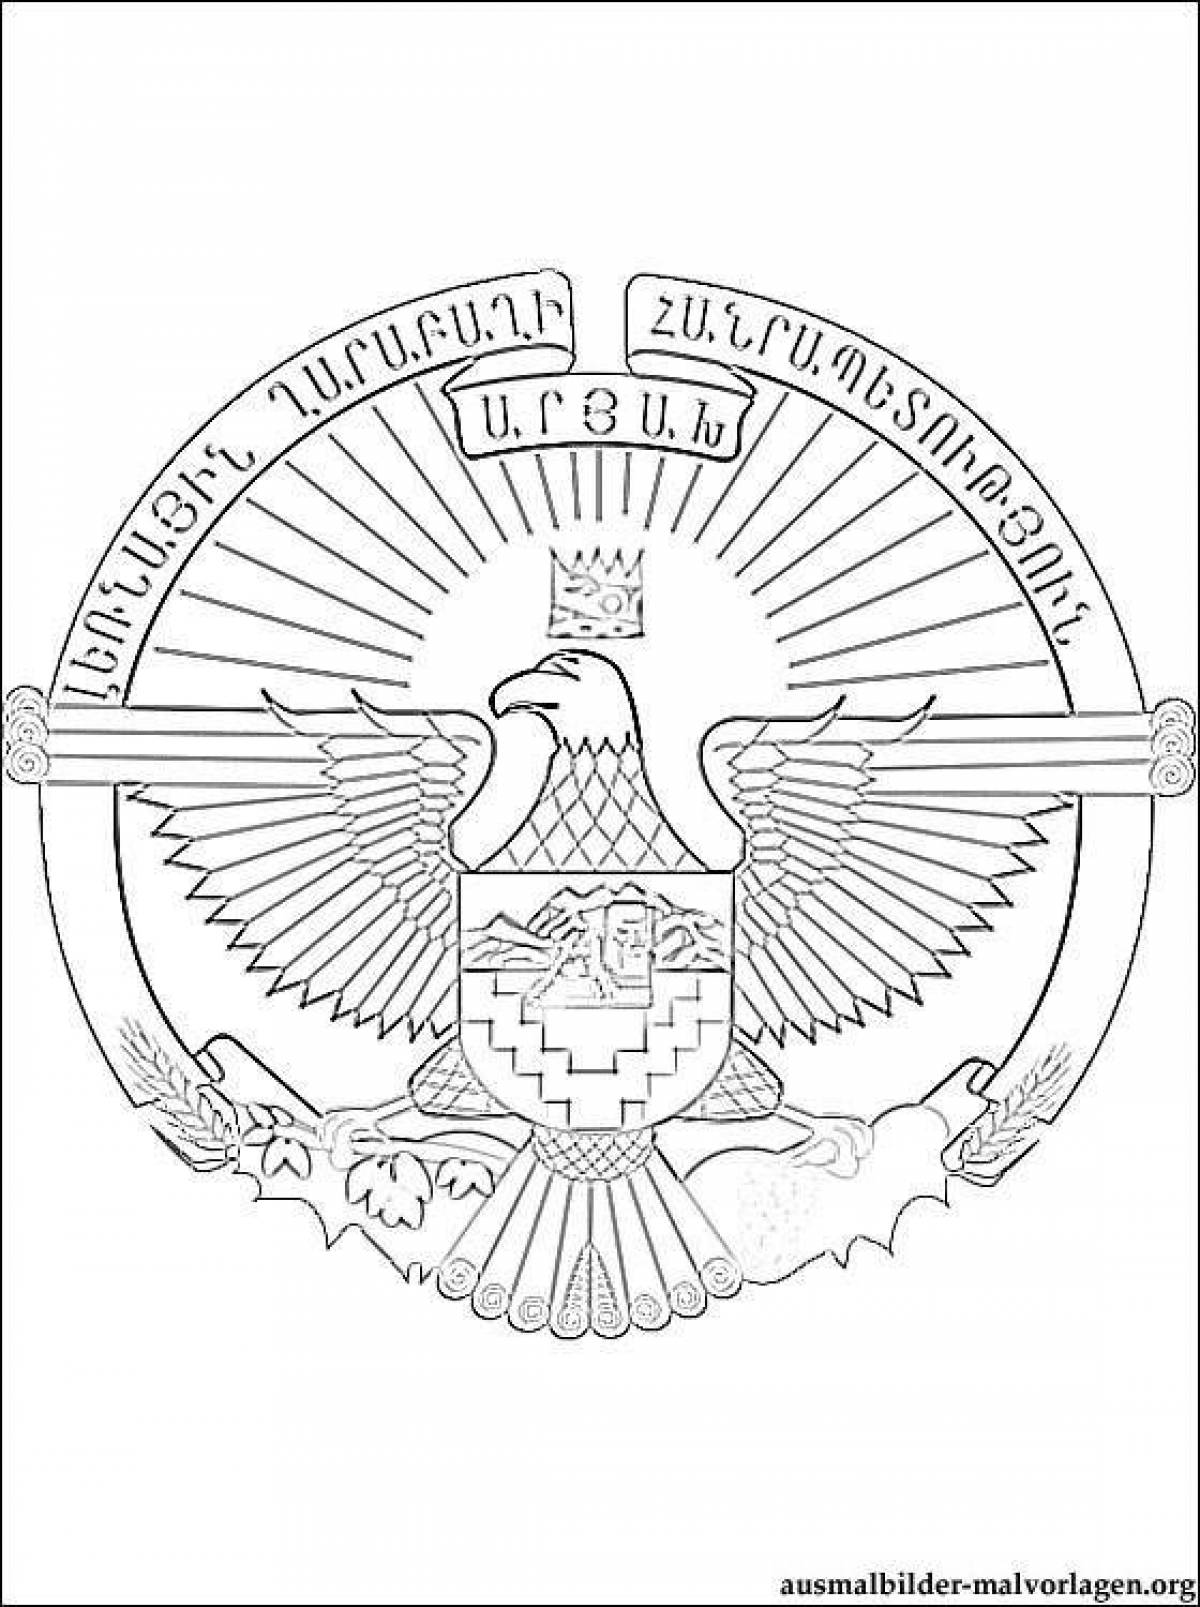 Лучистая раскраска герб беларуси